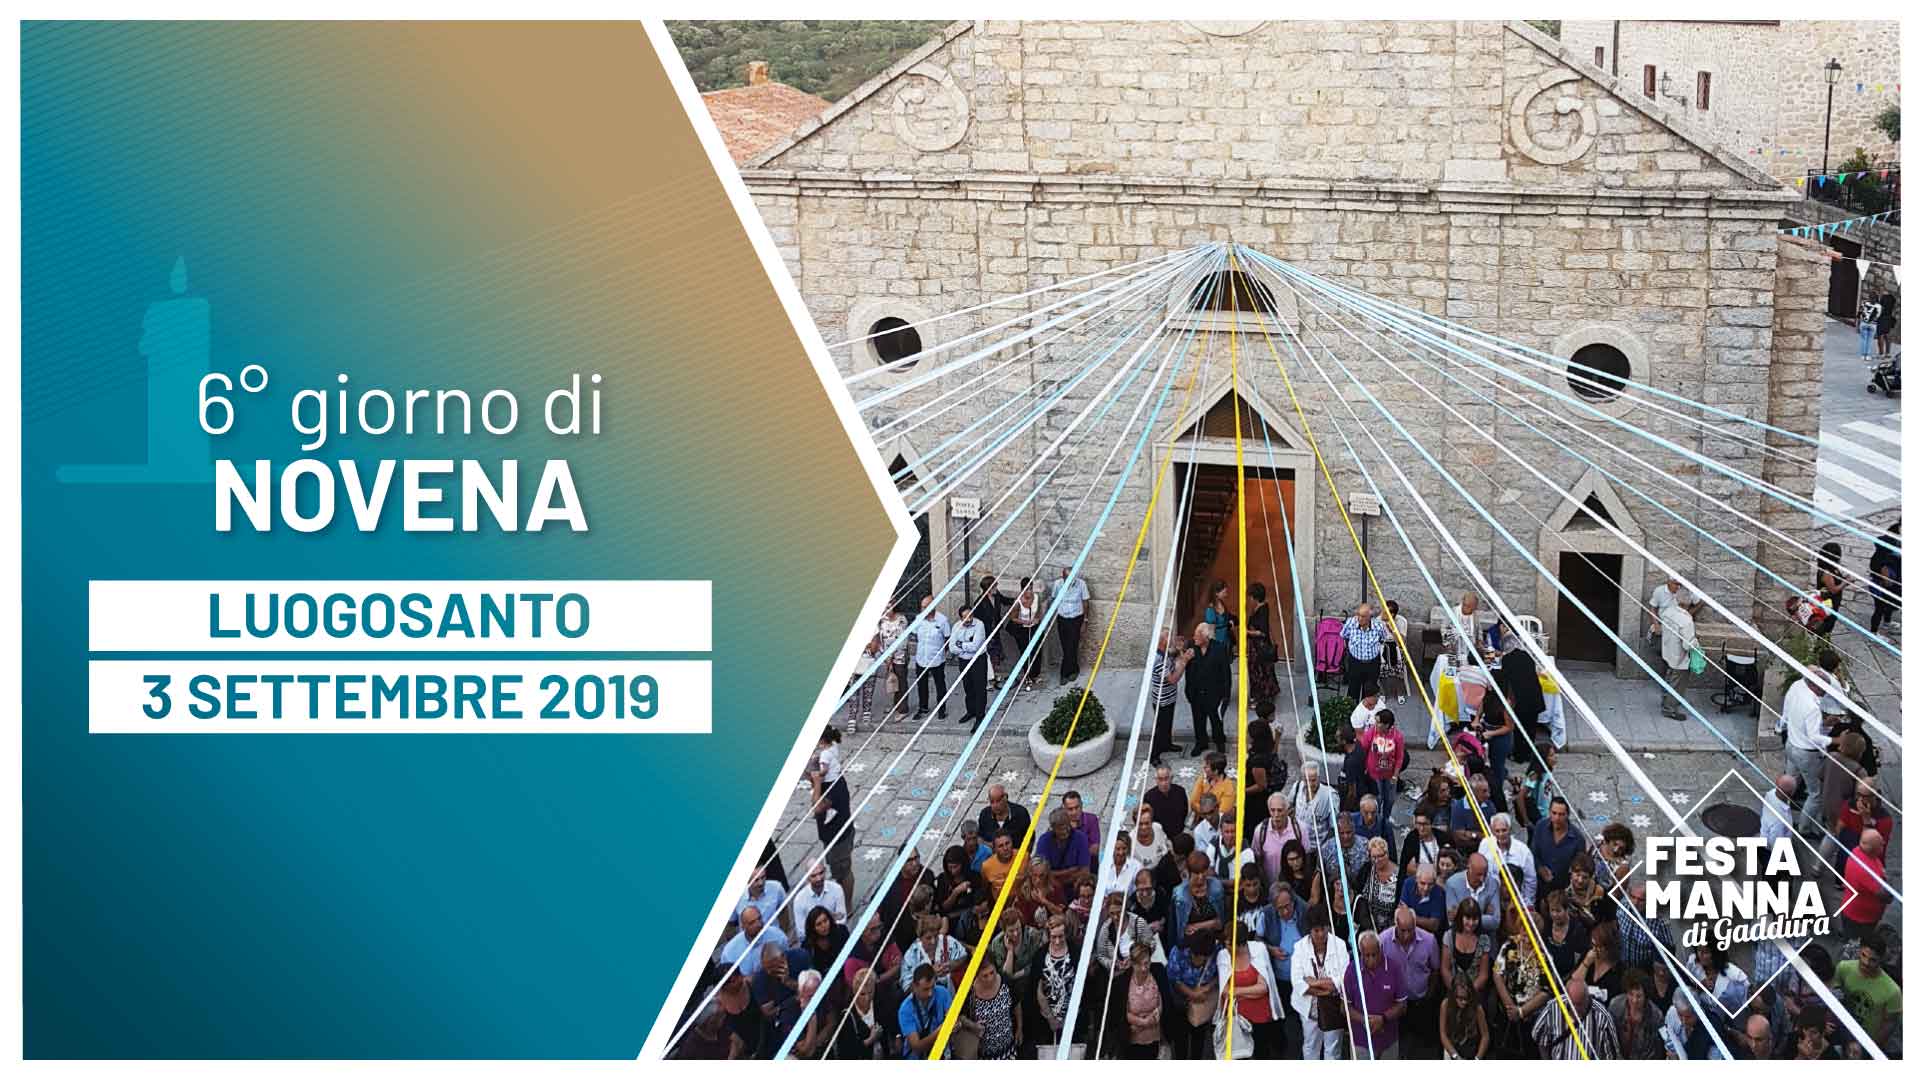 Sixth day of the novena | Festa Manna di Gaddura 2019